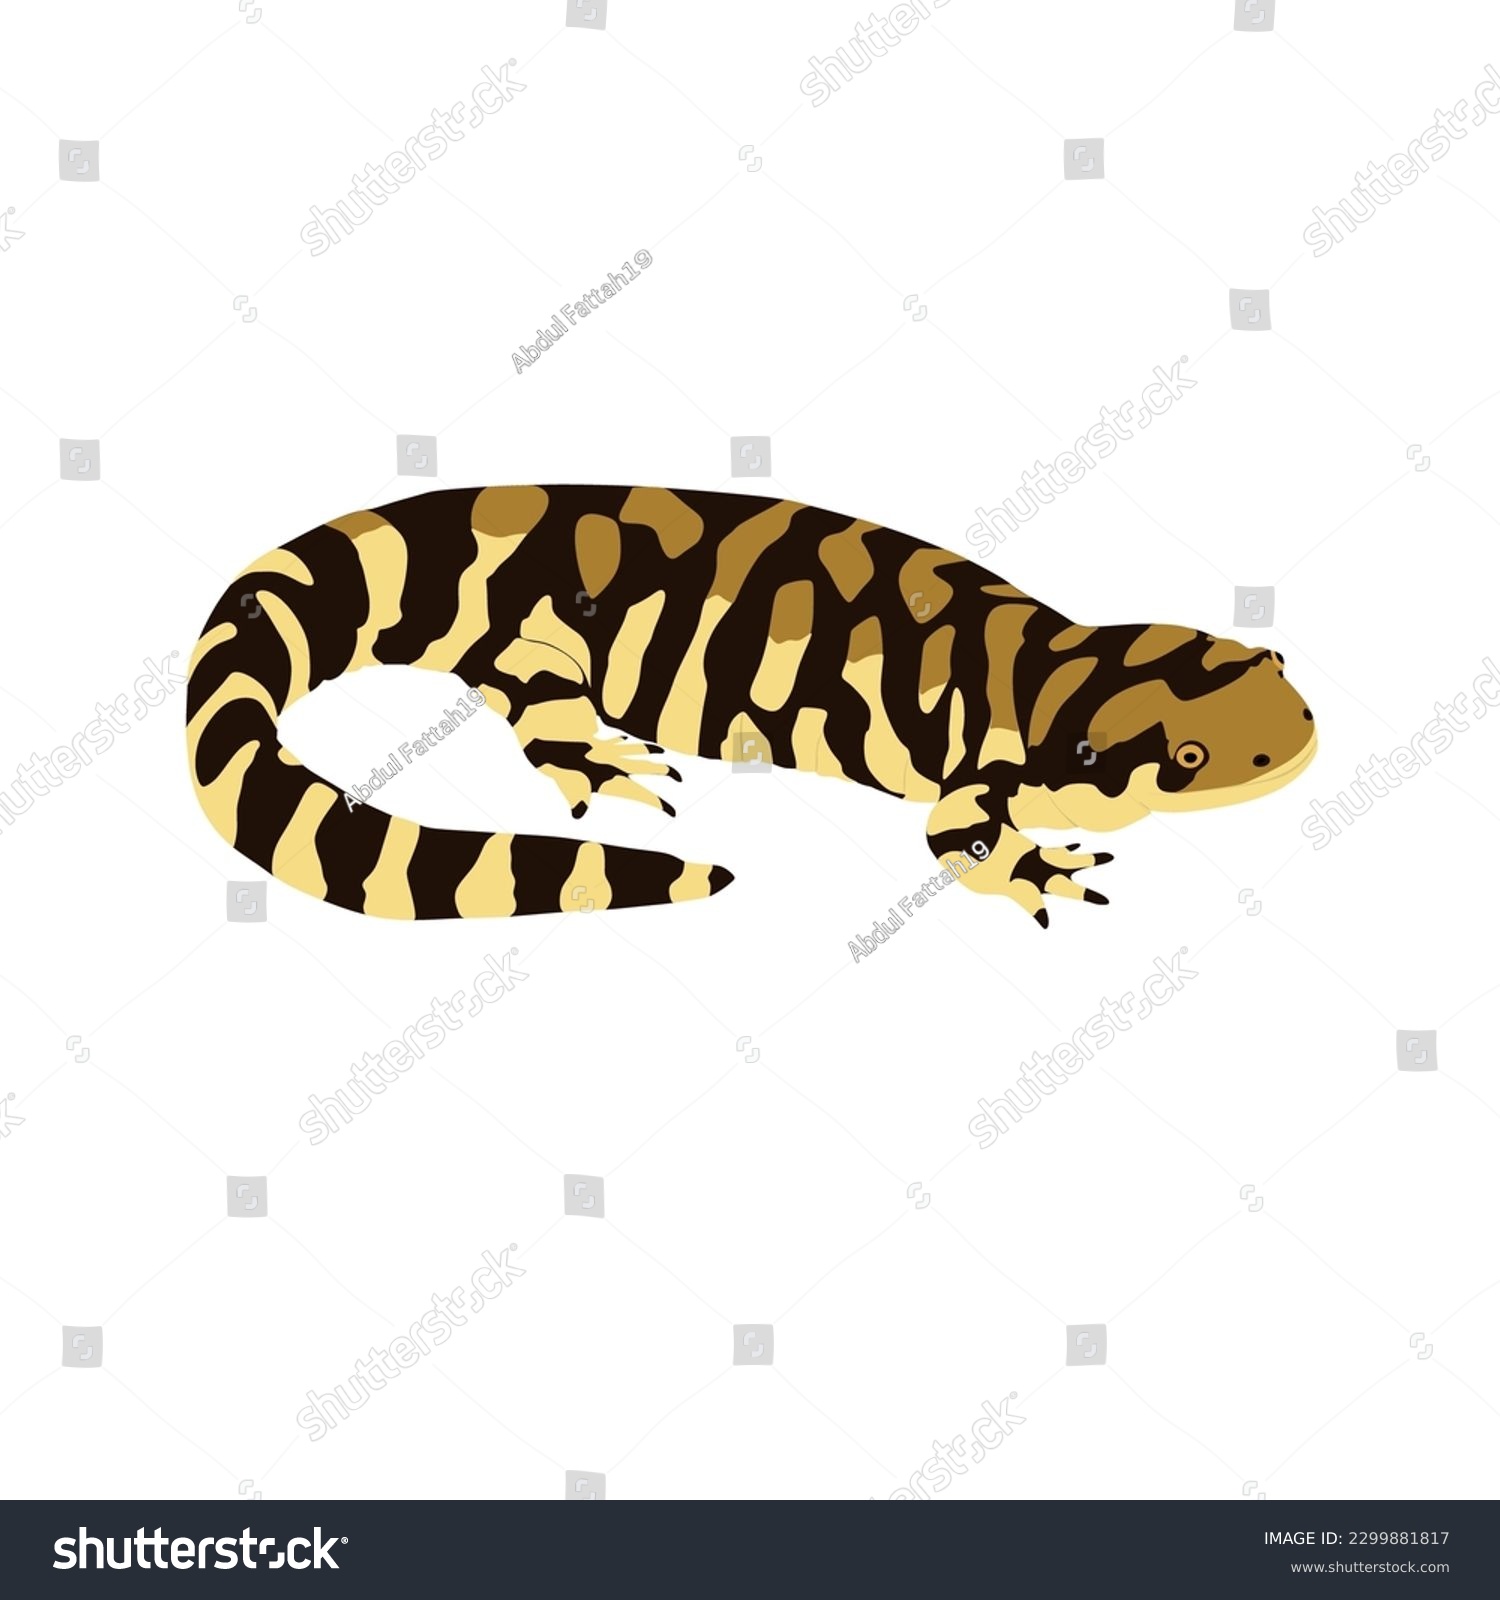 SVG of Tiger salamander, Ambystoma tigrinum. Salamander high quality image vector design svg